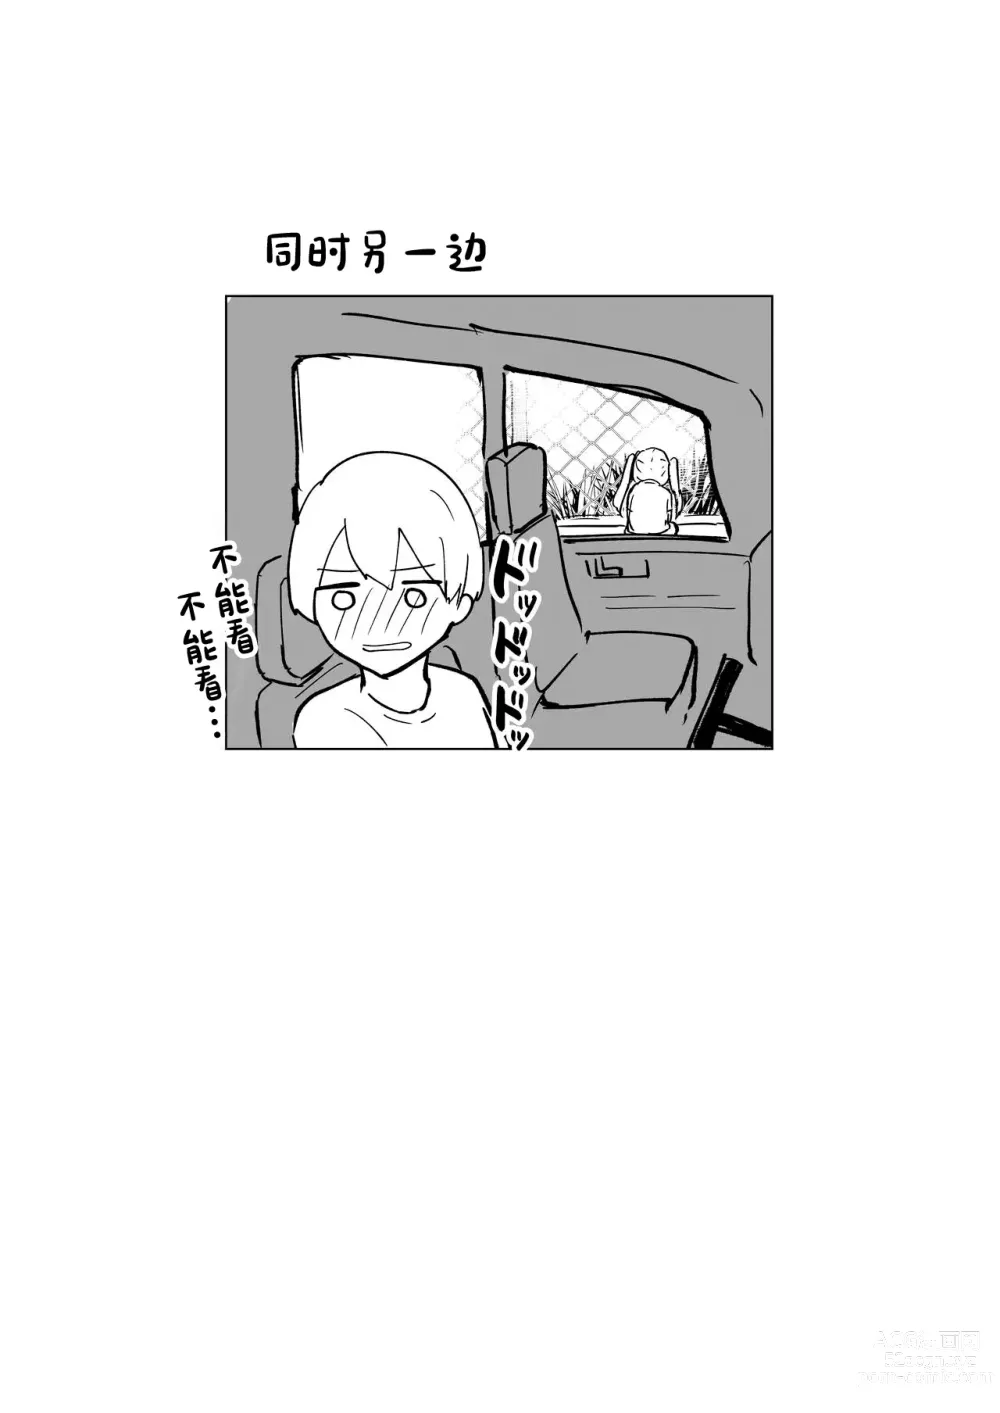 Page 70 of doujinshi 还可以忍耐的吧?